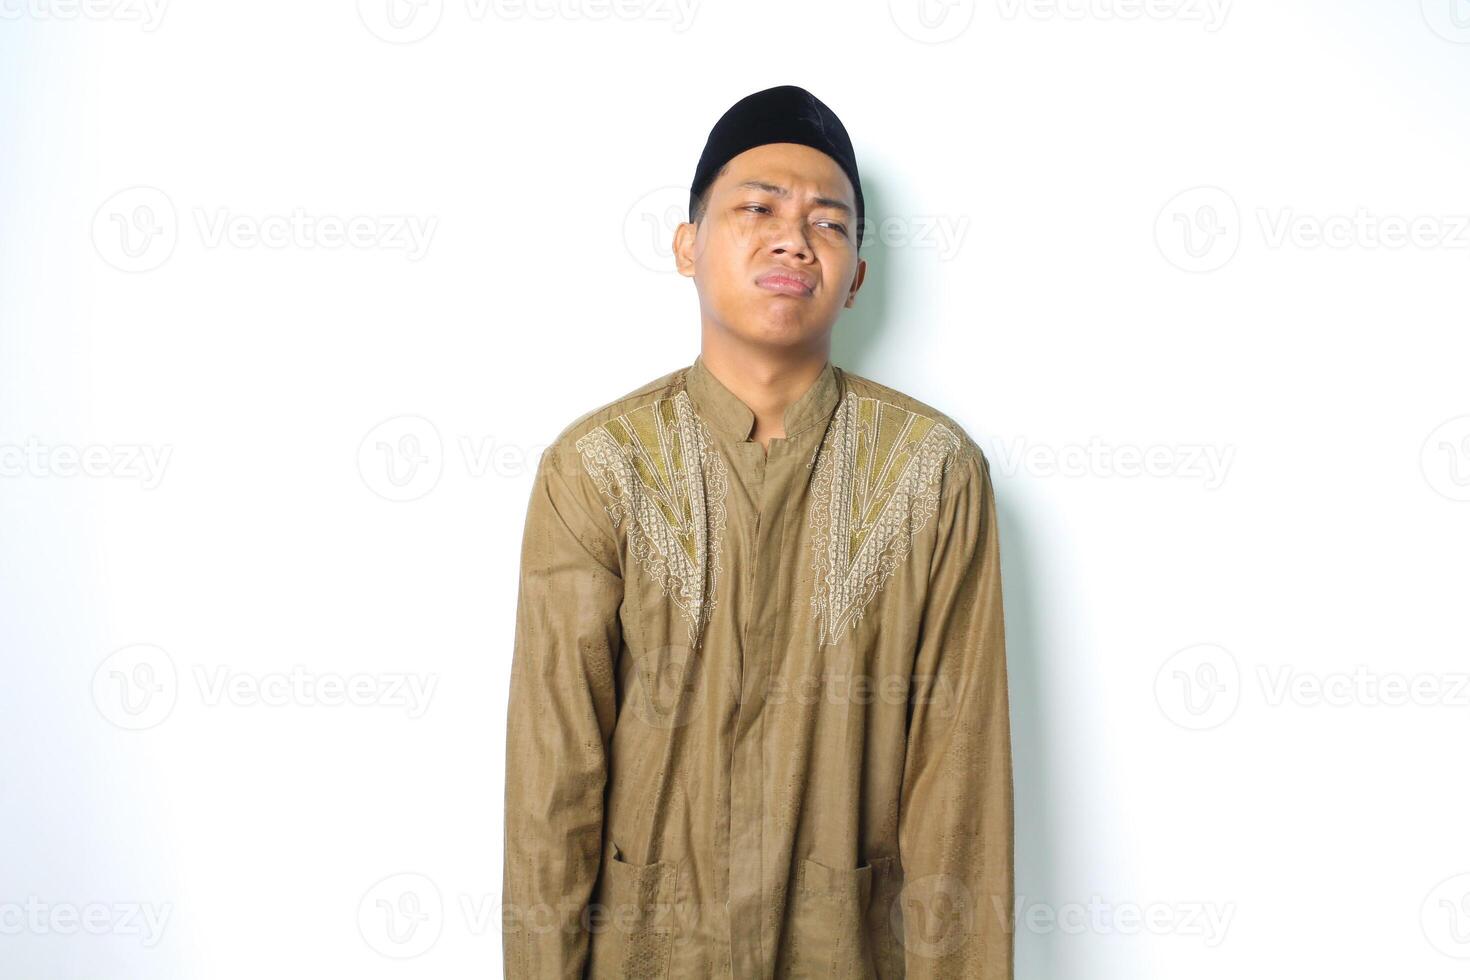 atraente ásia muçulmano homem vestindo islâmico roupas Veja depressivo isolado em branco fundo foto